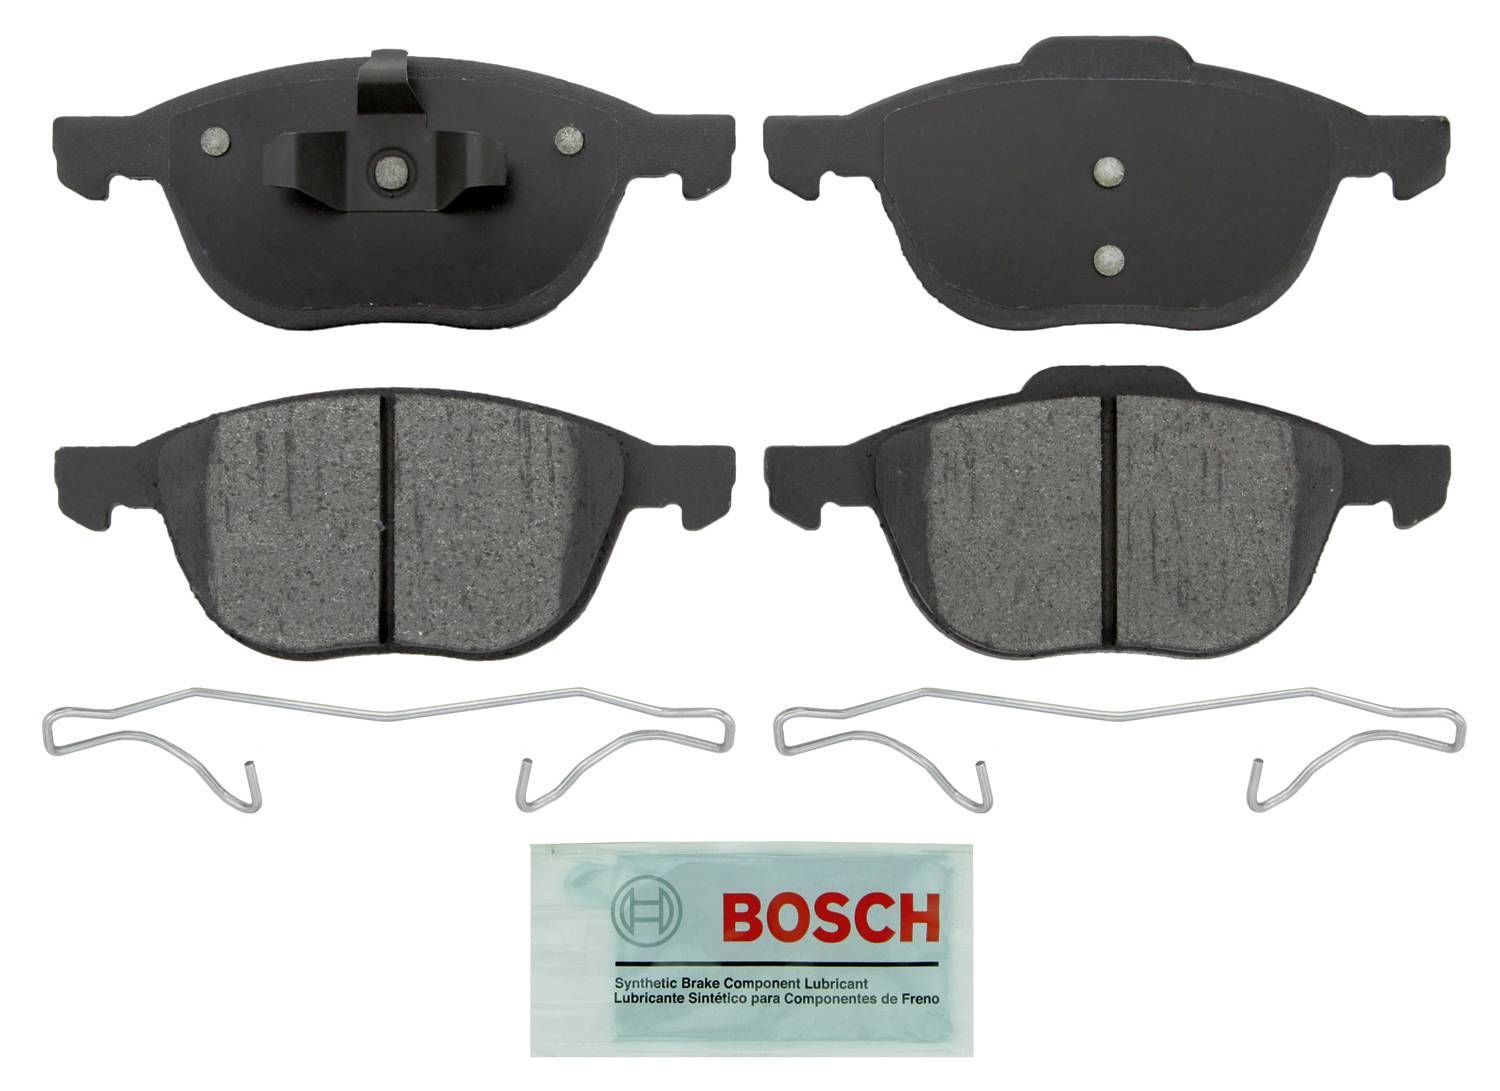 BOSCH BRAKE - Bosch Blue Ceramic Brake Pads with Hardware (Front) - BQC BE1044H